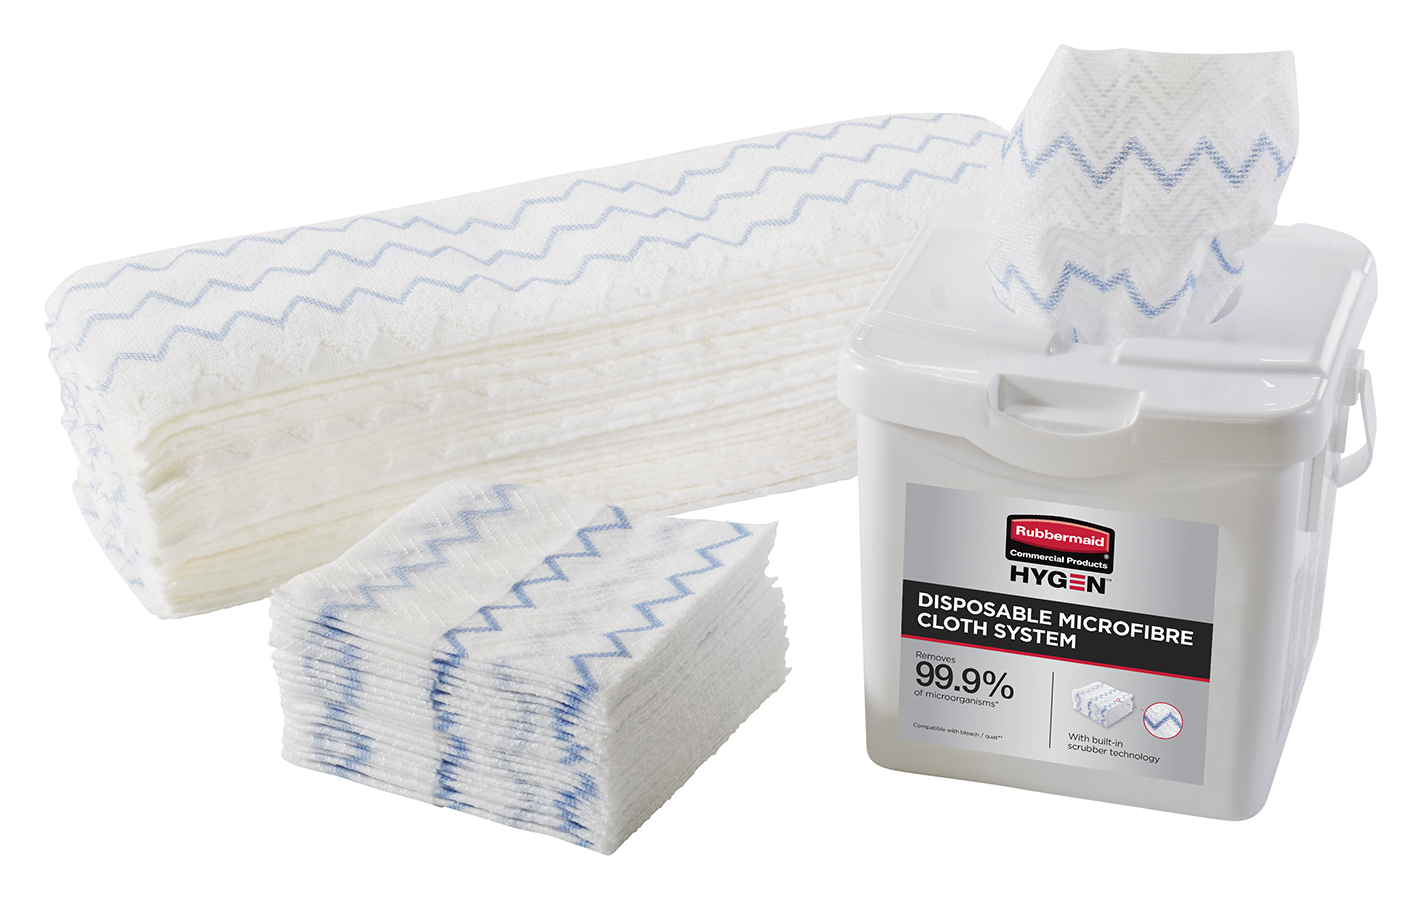 HYGEN Disposable Microfibre Cloth Starter Kit System